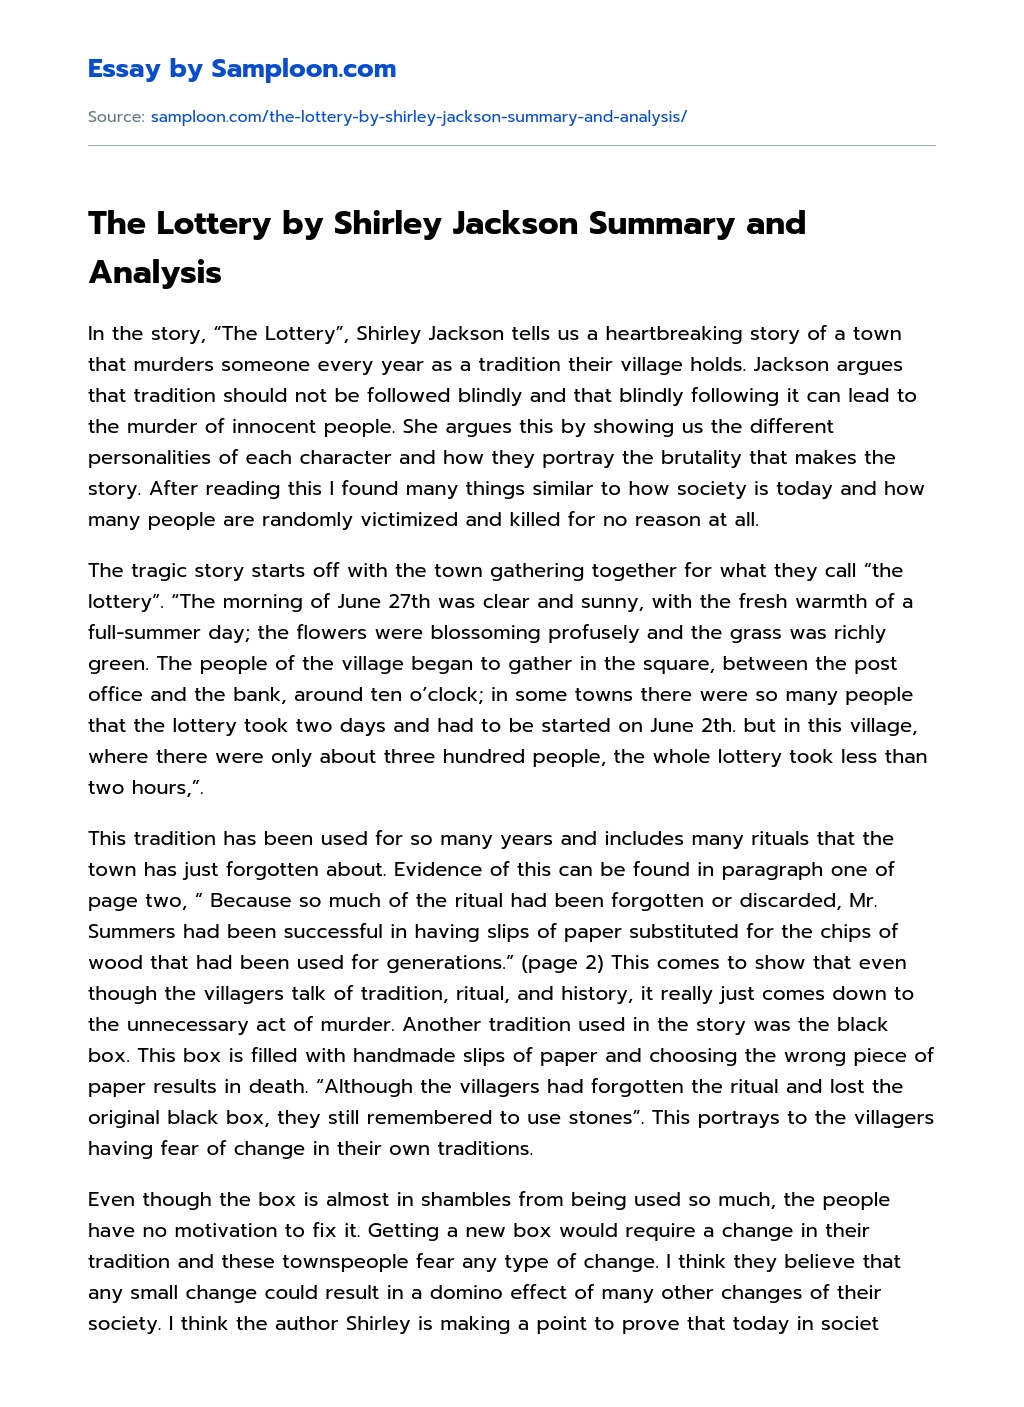 The Lottery by Shirley Jackson Summary and Analysis Argumentative Essay essay